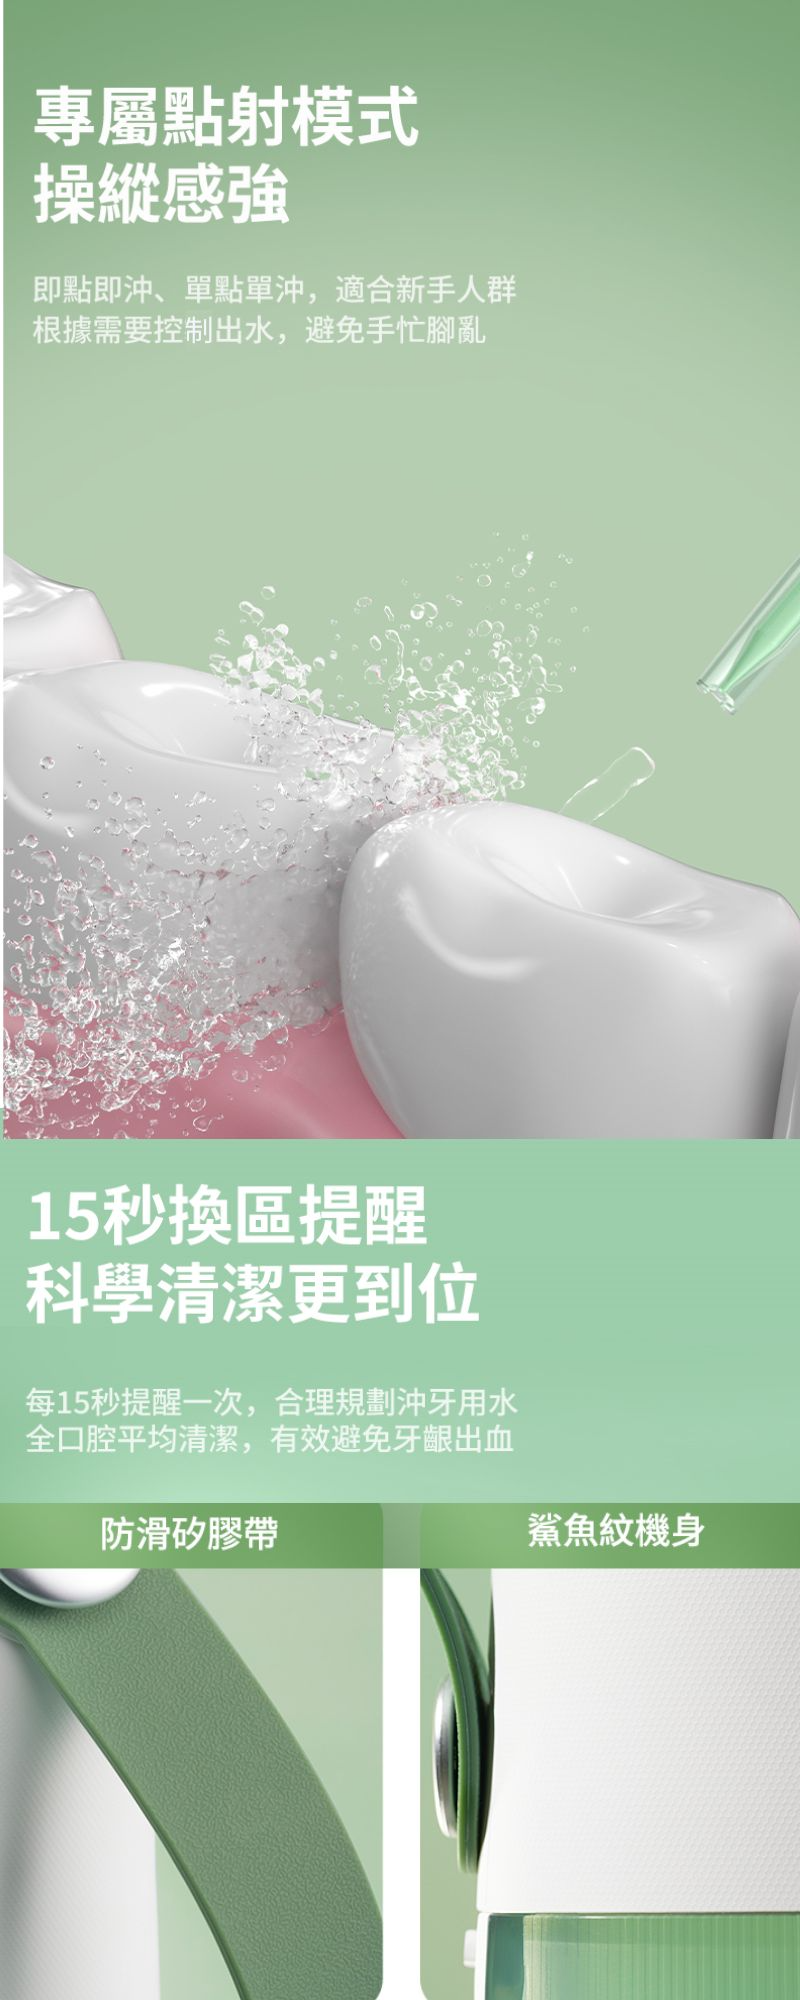 Oclean 歐可林 W10-PP 可攜式電動水牙線機 (桃紅色)